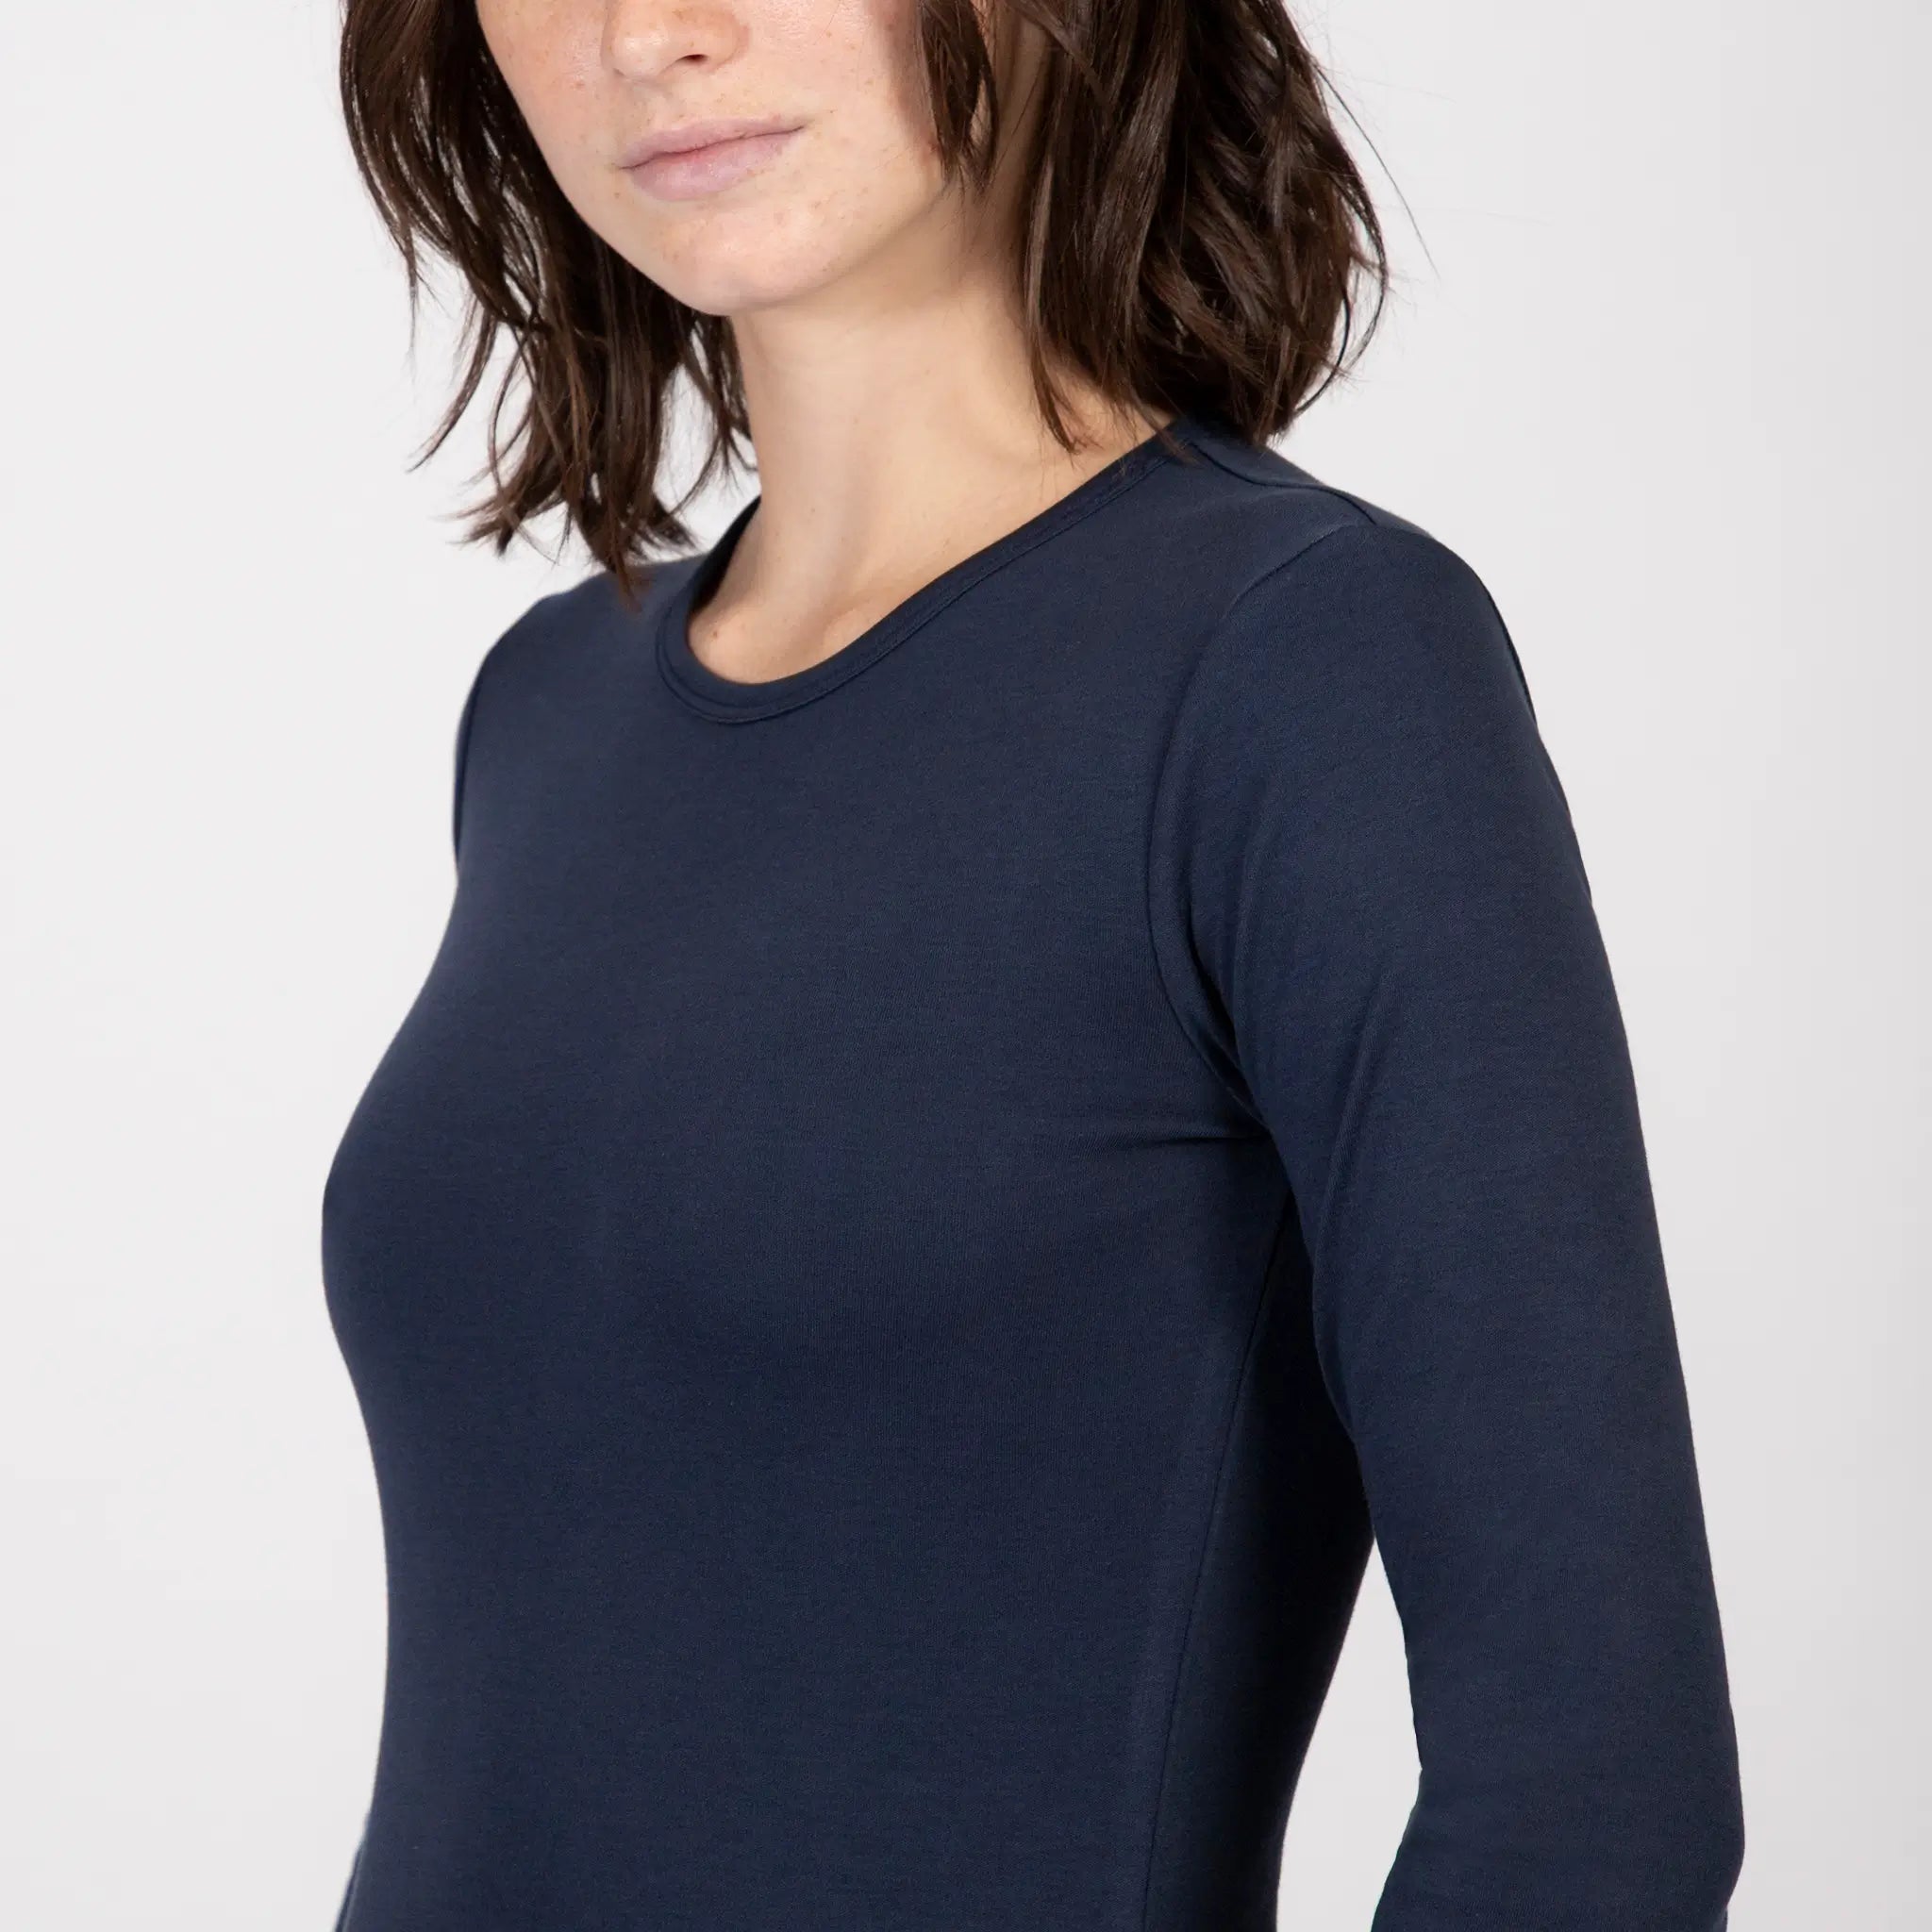 womens eco friendly tshirt long sleeve color navy blue